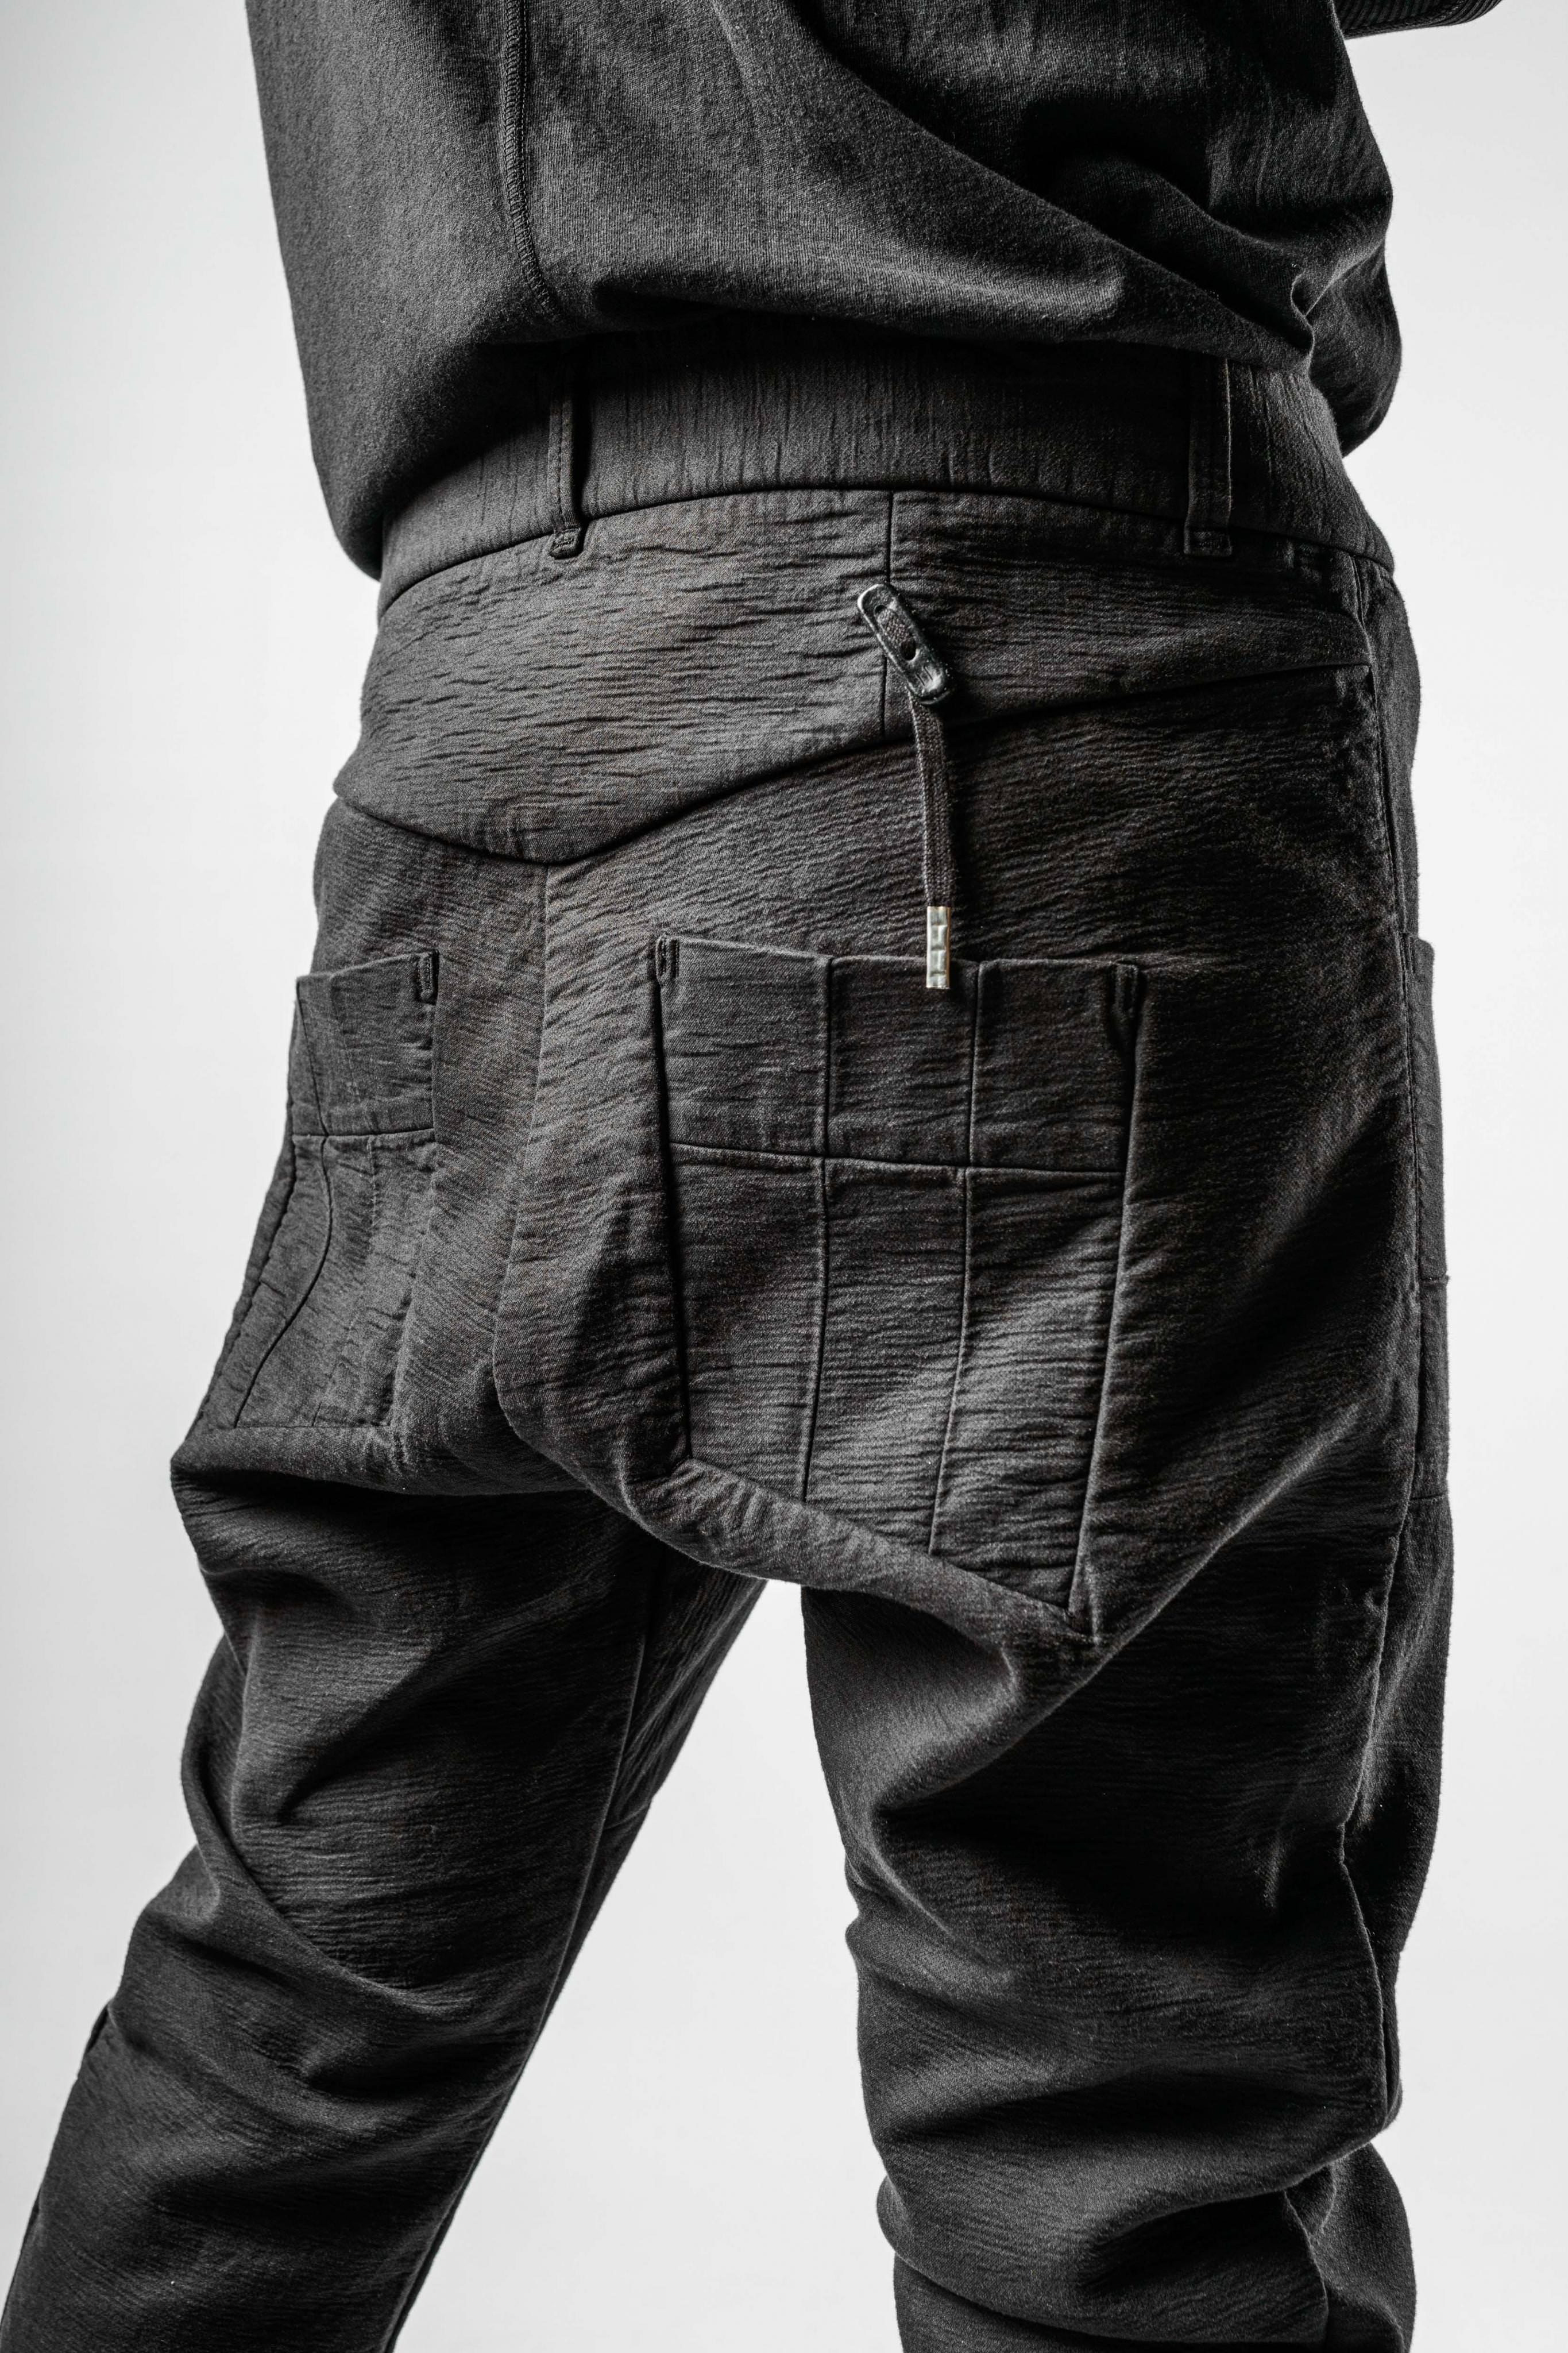 nogle få Garanti Forkludret Boris Bidjan Saberi P13TF Tight Fit Jeans in high-dense structured cotton |  Elixirgallery